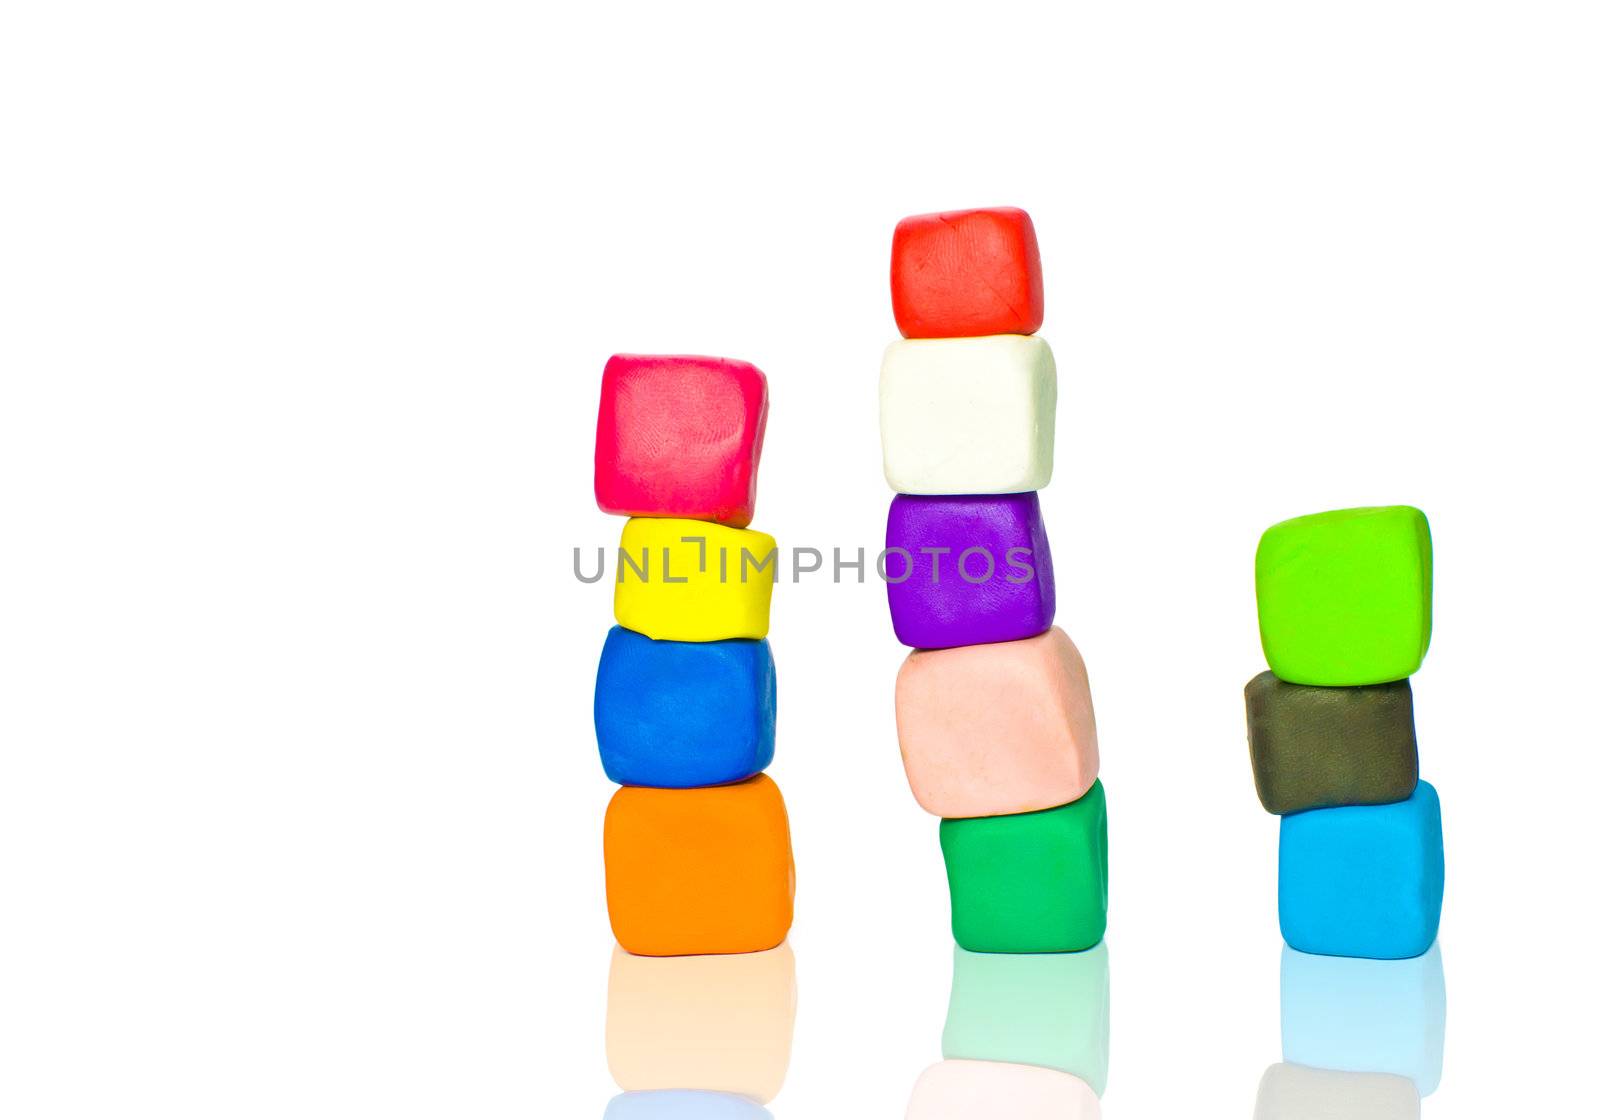 Stacks of plasticine blocks by TanawatPontchour